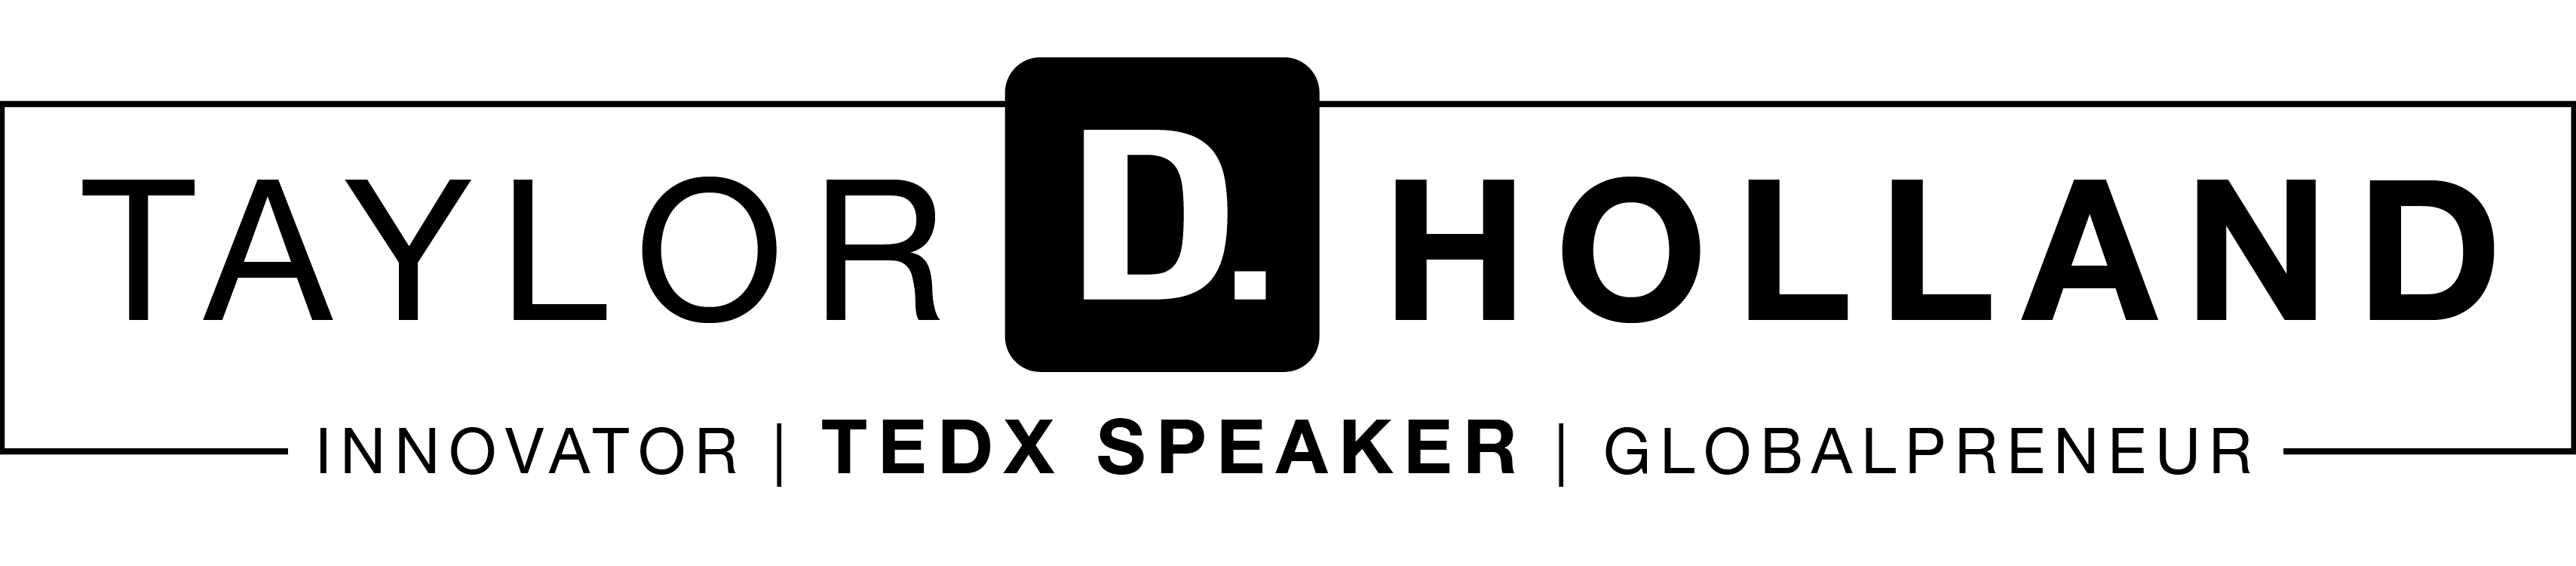 Taylor D. Holland Logo